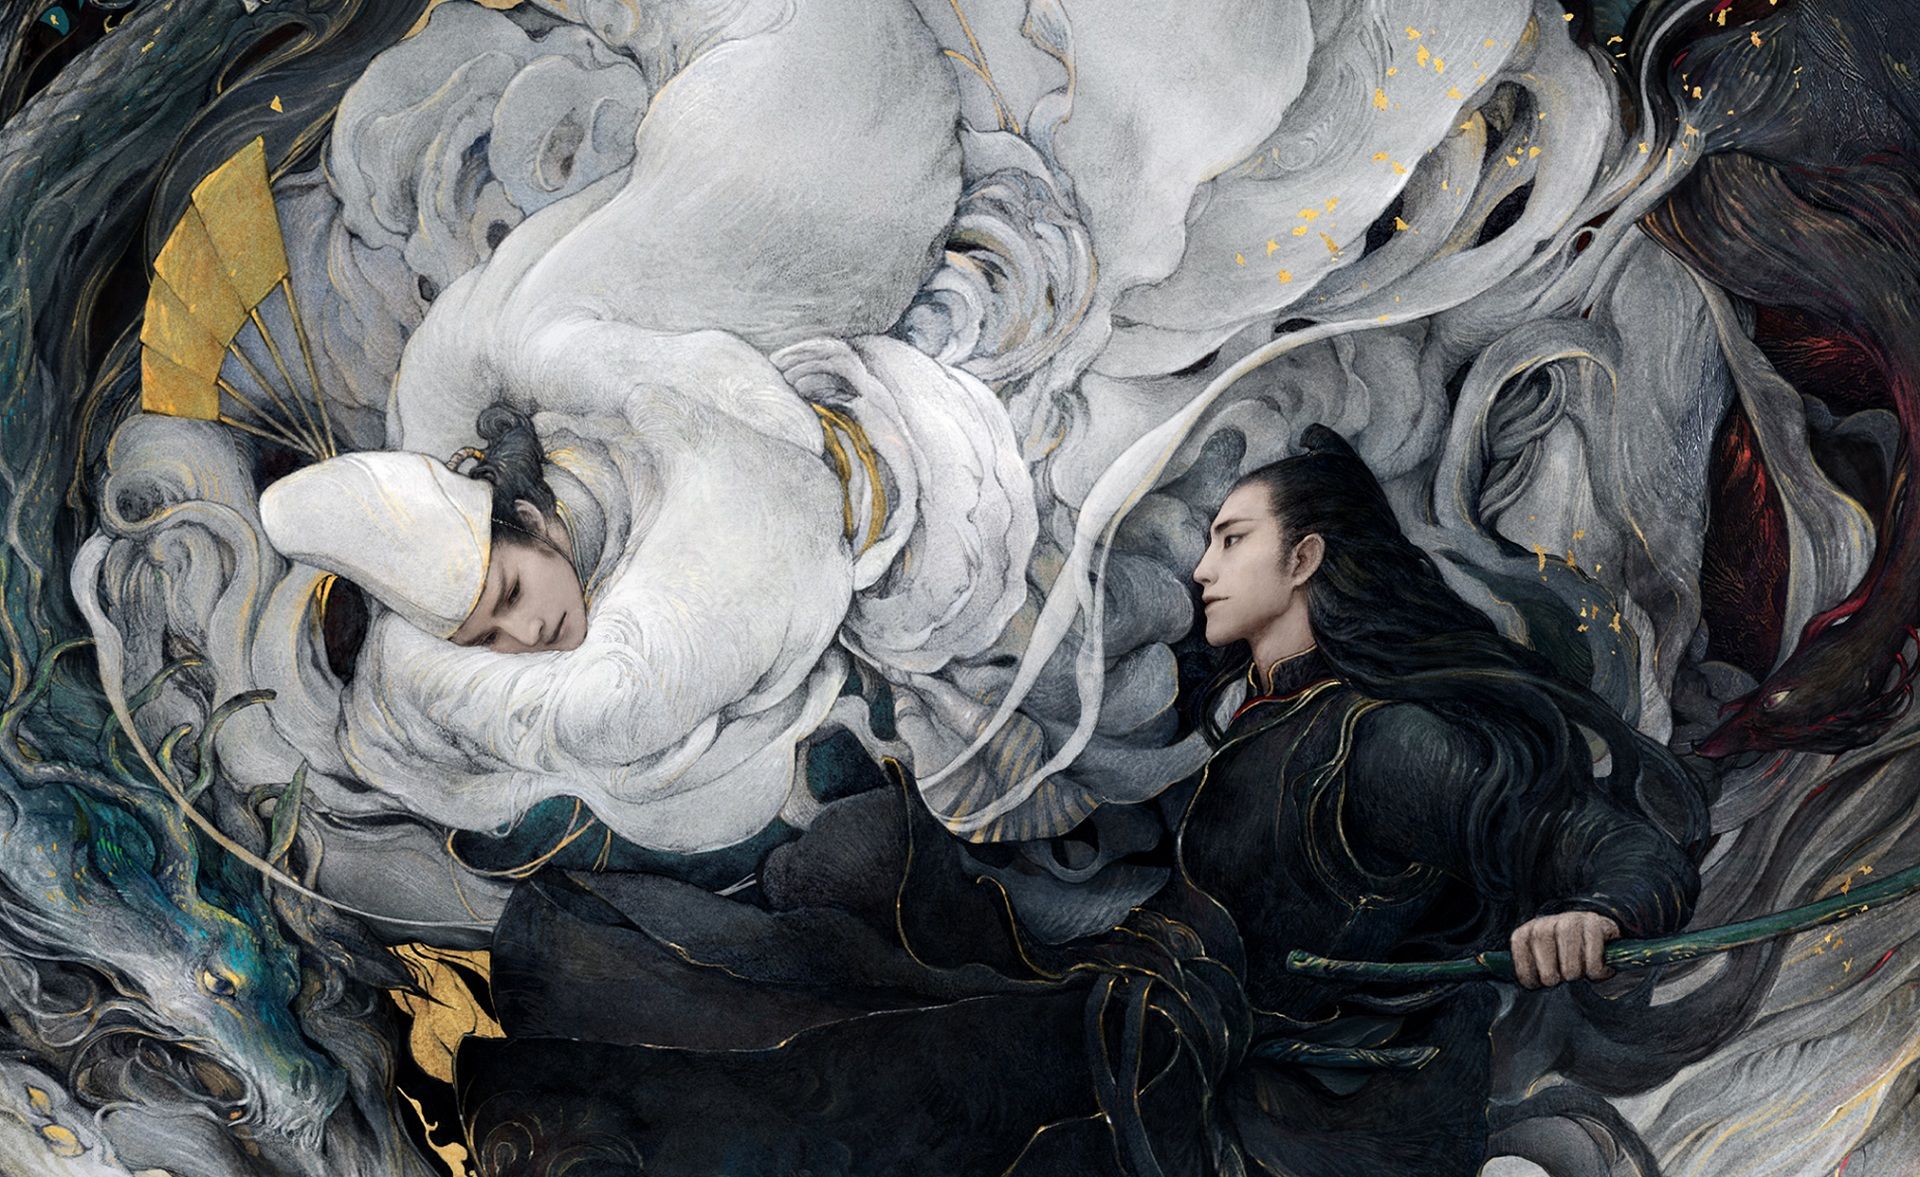  Yin Yang Hintergrundbild 1920x1177. The Yin Yang Master: Dream Of Eternity HD Wallpaper And Background